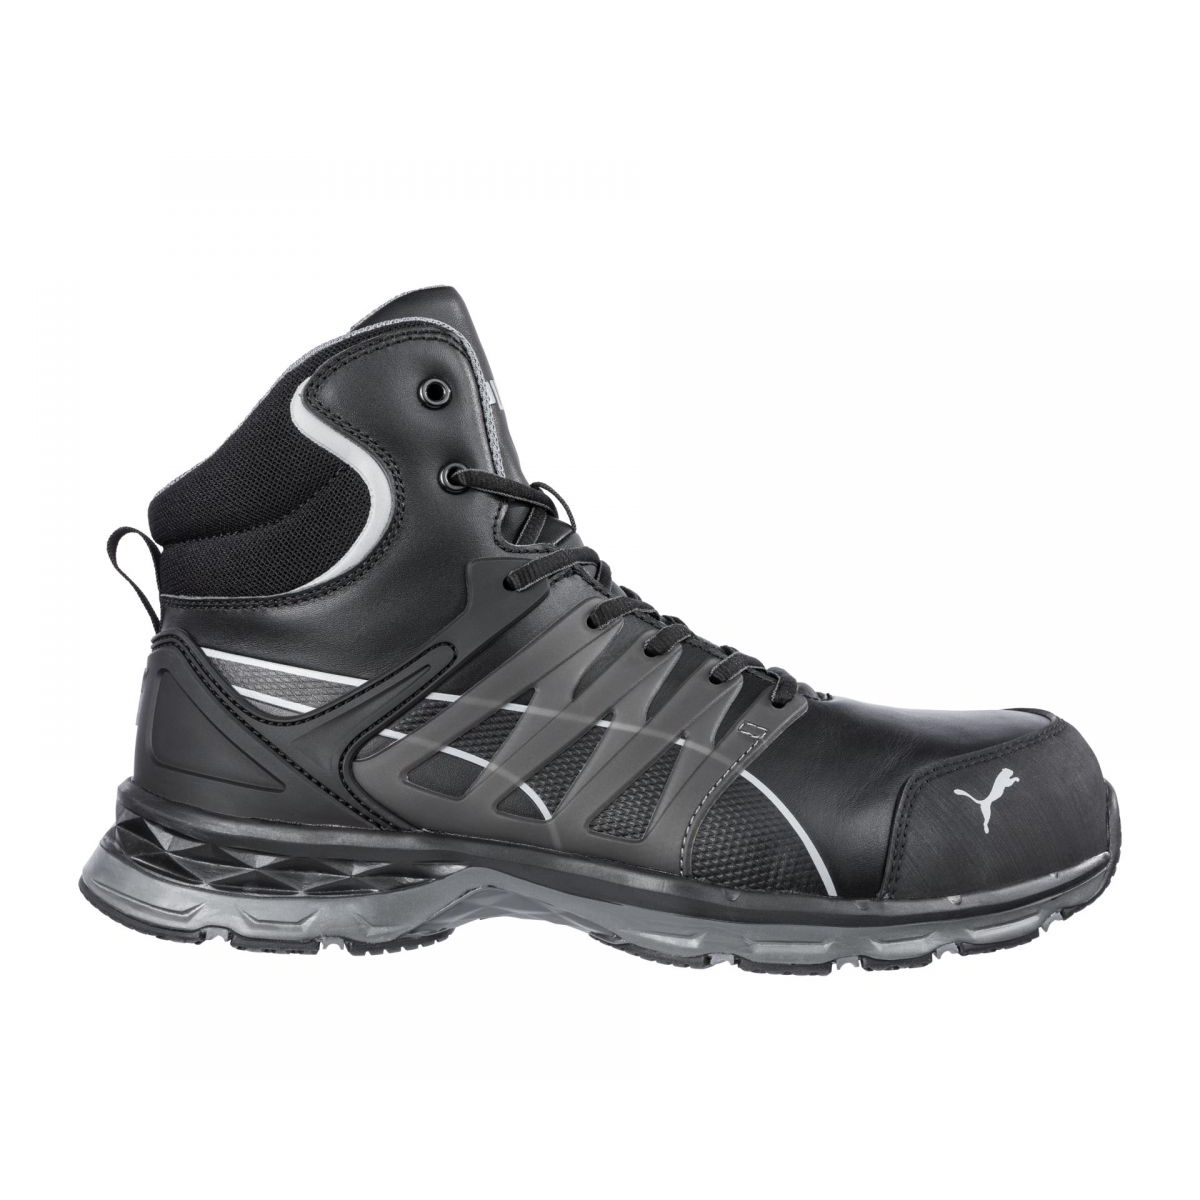 PUMA Safety Men's Velocity 2.0 Mid Composite Toe ESD Work Boot Black - 633805 ONE SIZE BLACK - BLACK, 10.5